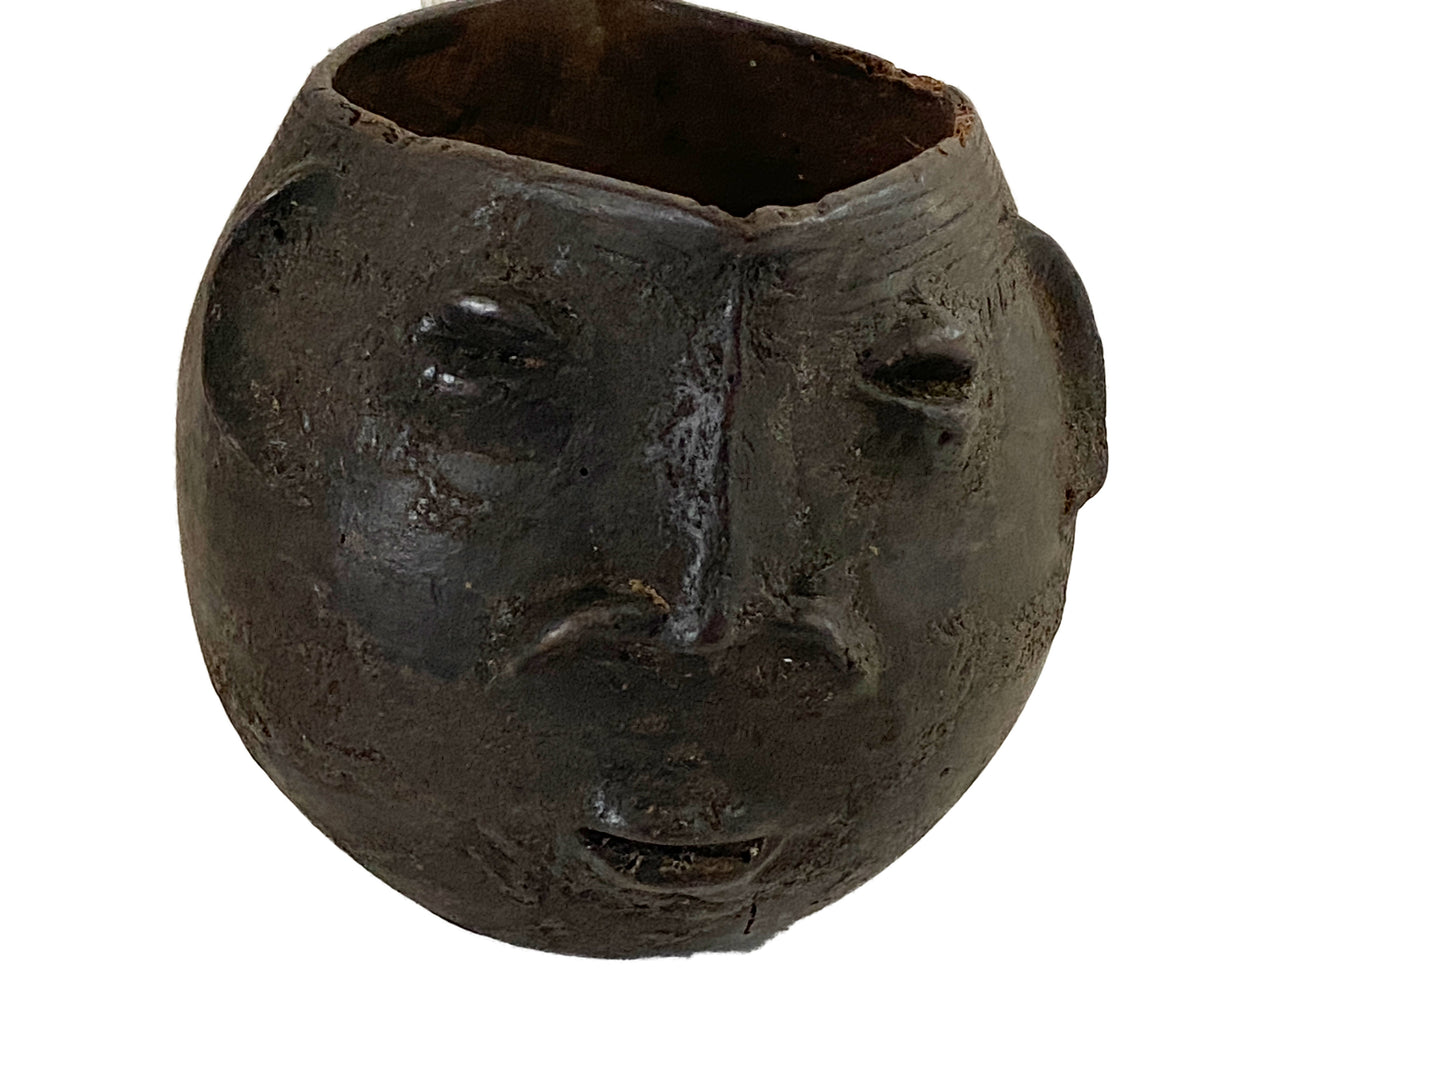 #3736 Kuba wooden Cup Figural Head Congo